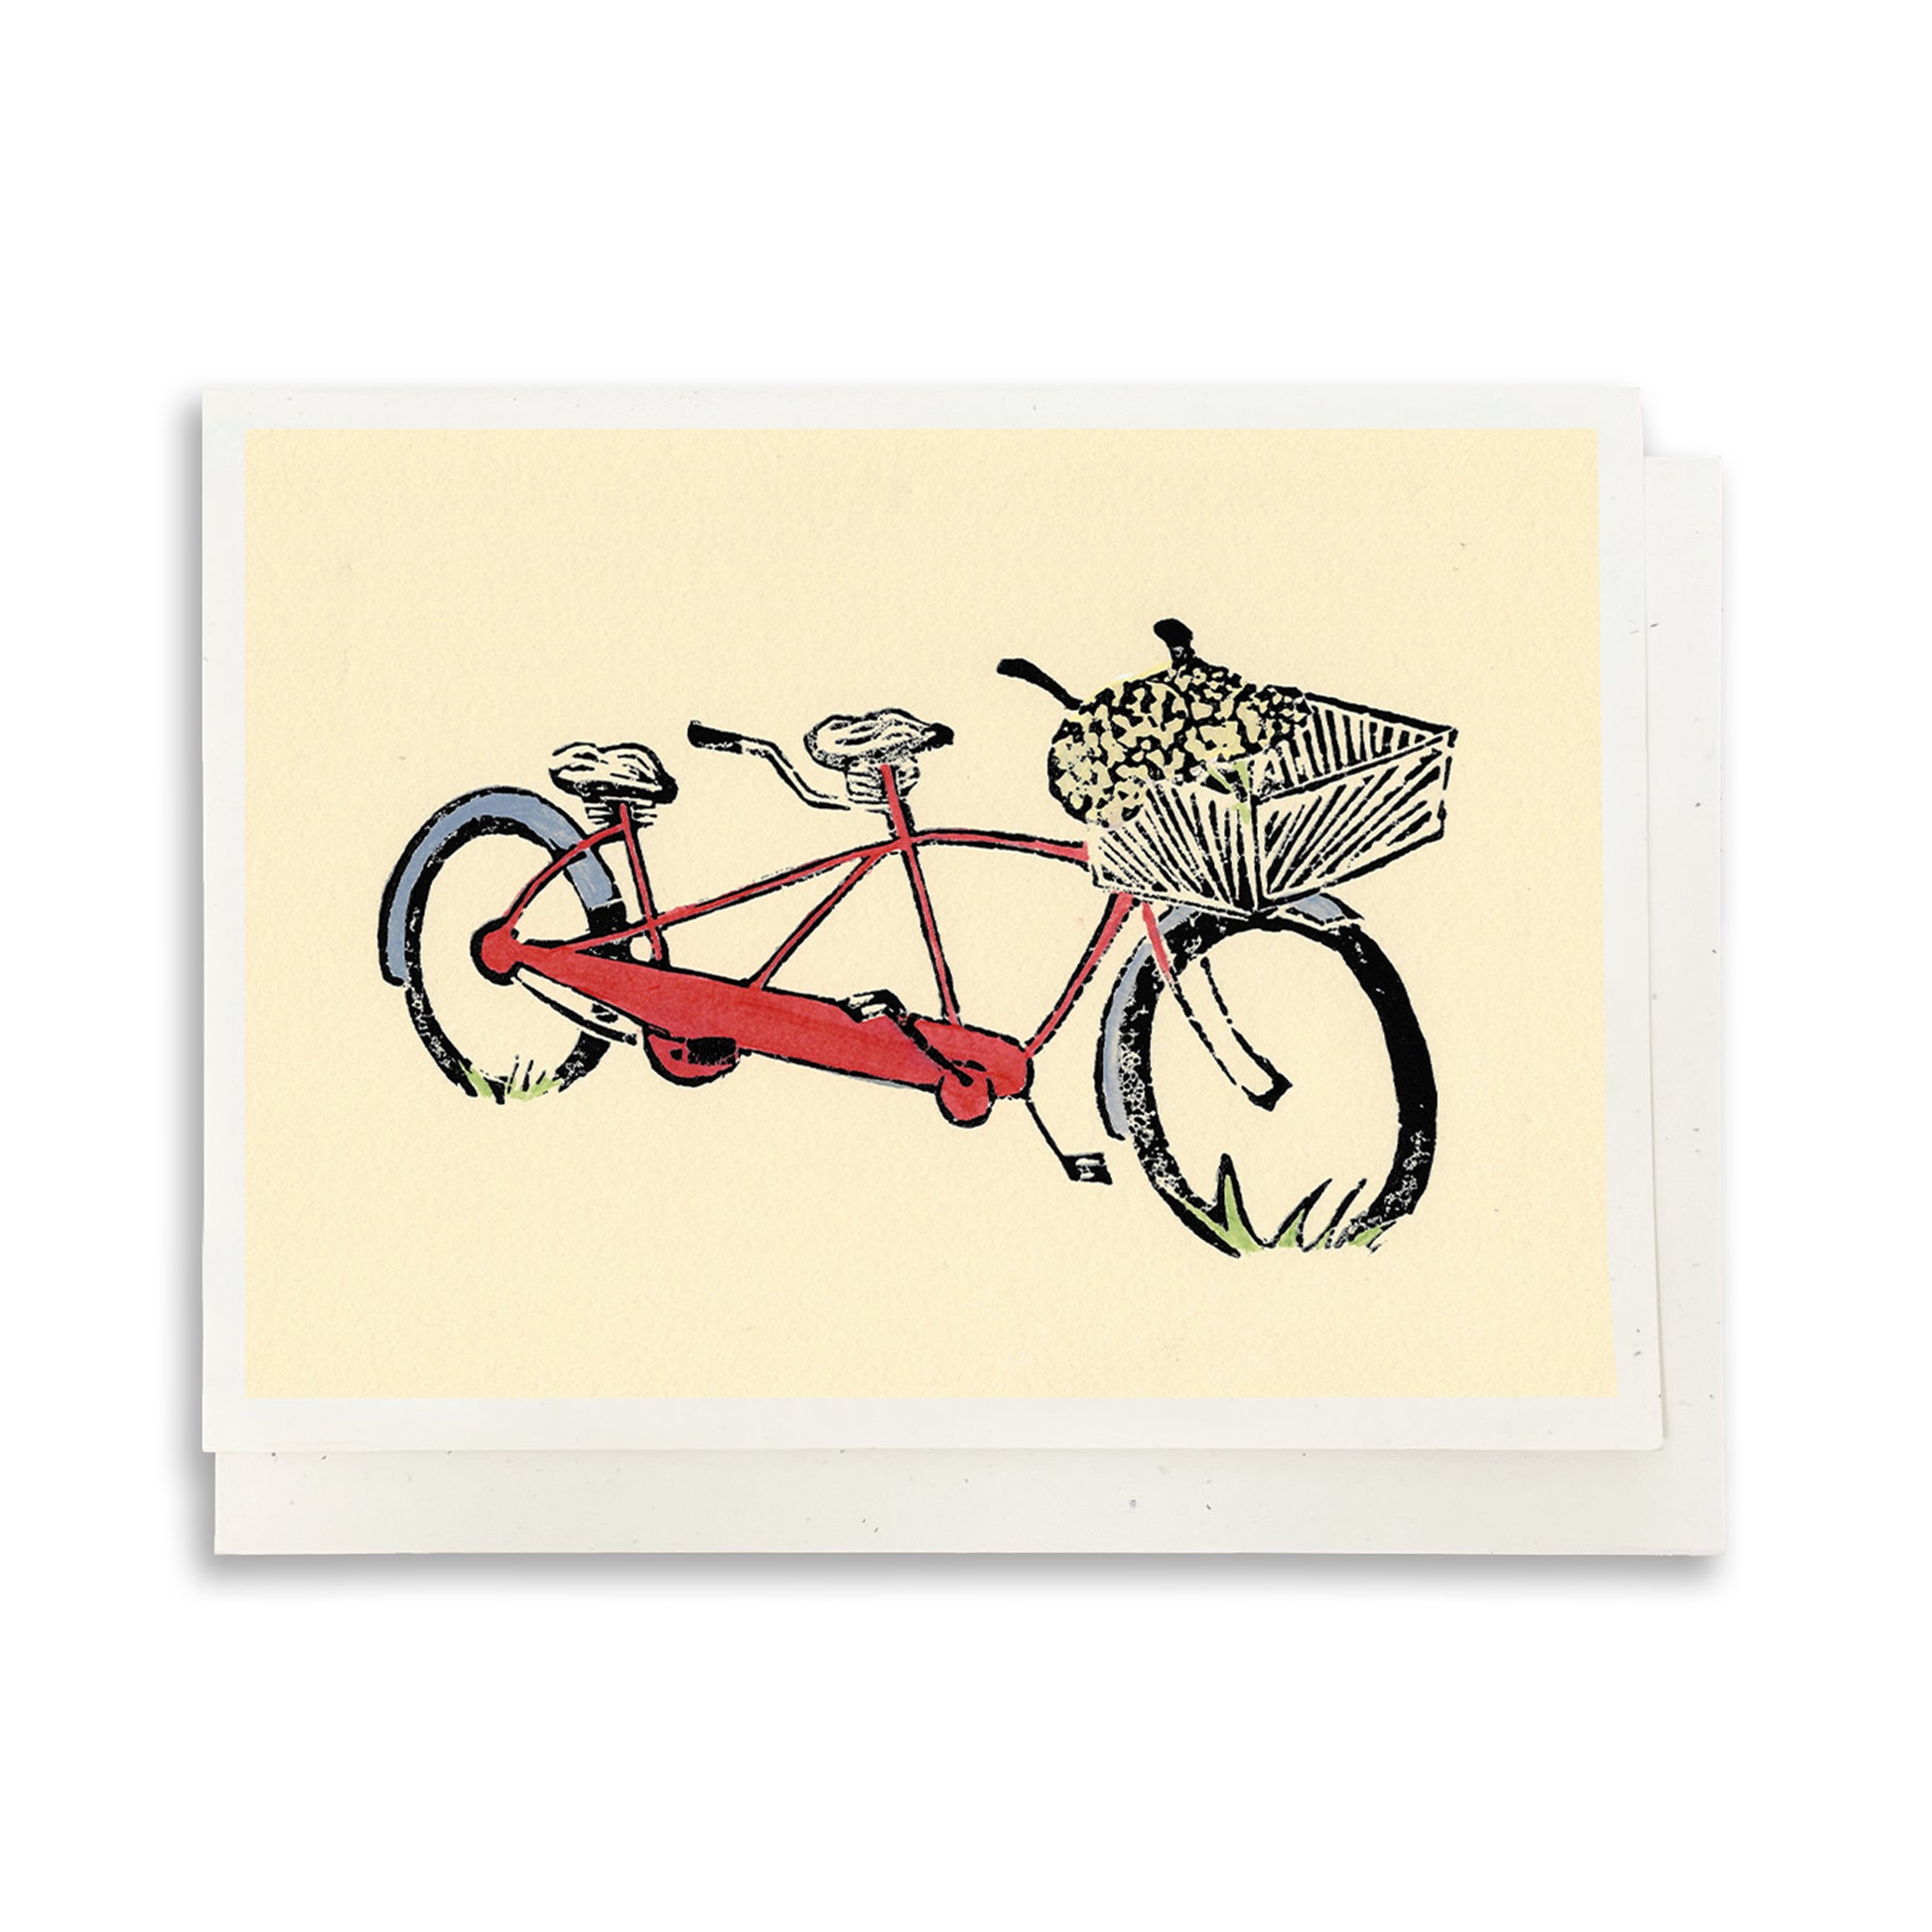 Red Tandem bike greeting card by Natalia Wohletz of Peninsula Prints.